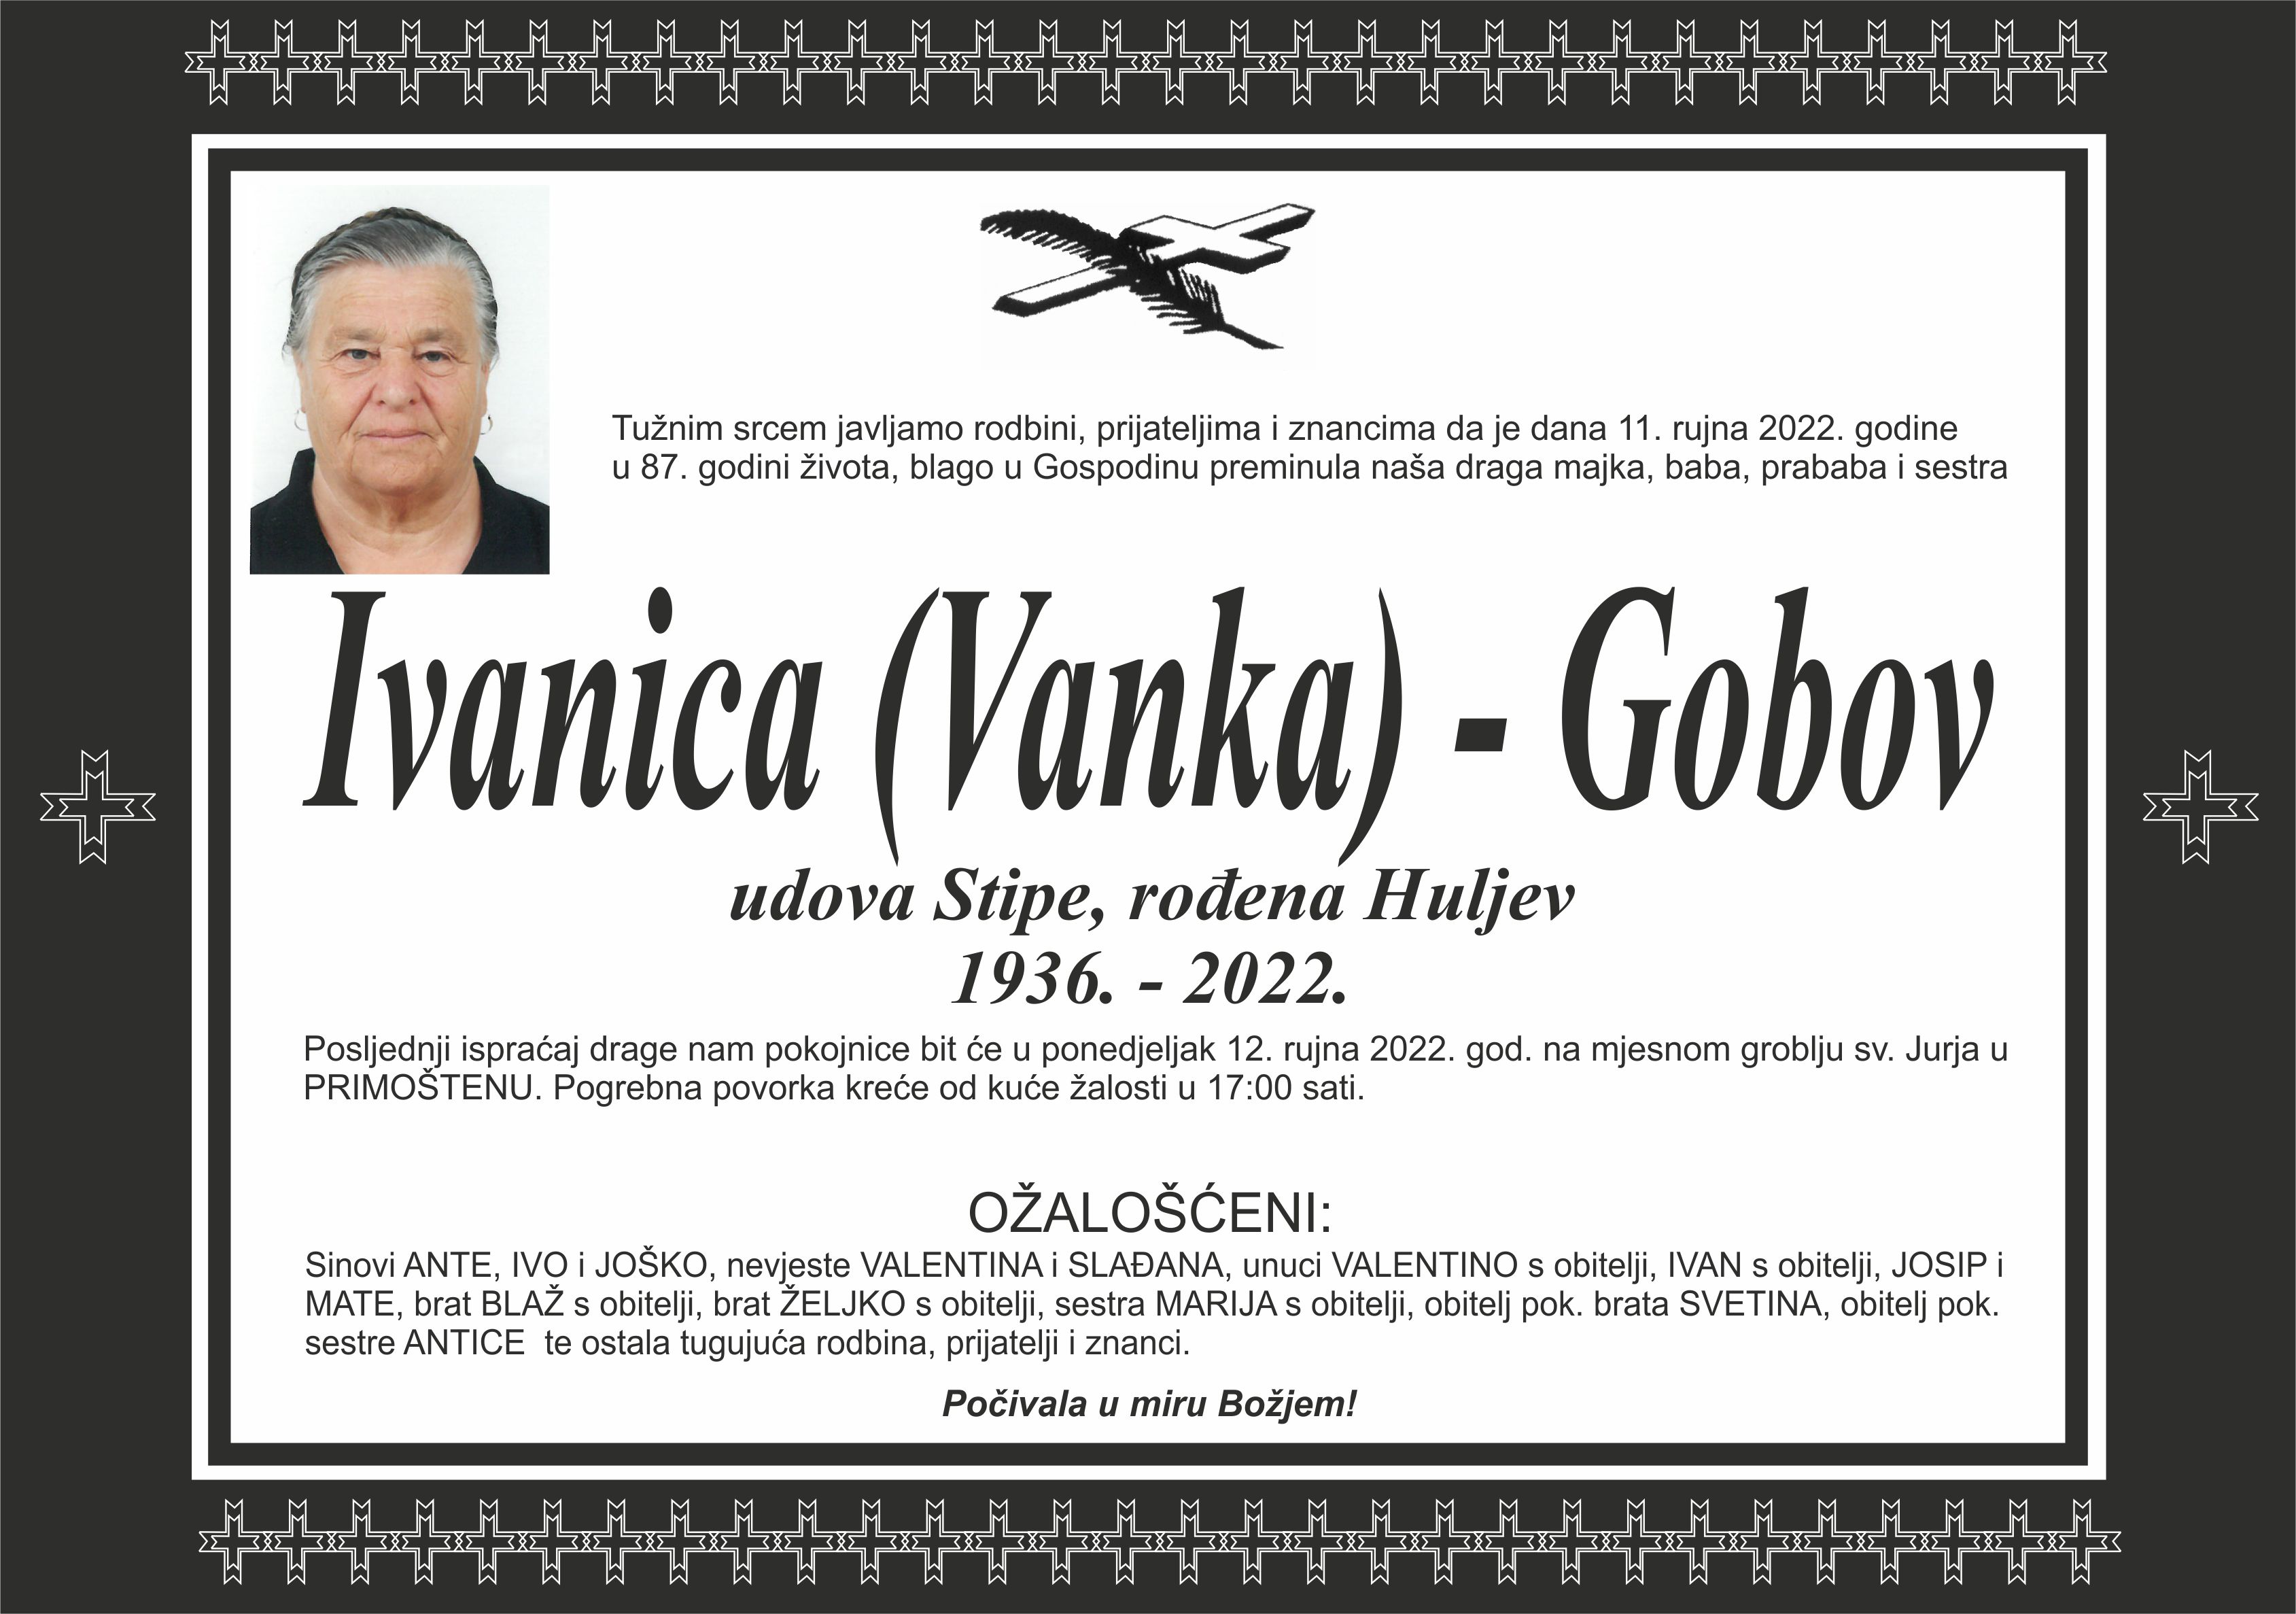 Umrla Ivanica (Vanka) - Gobov